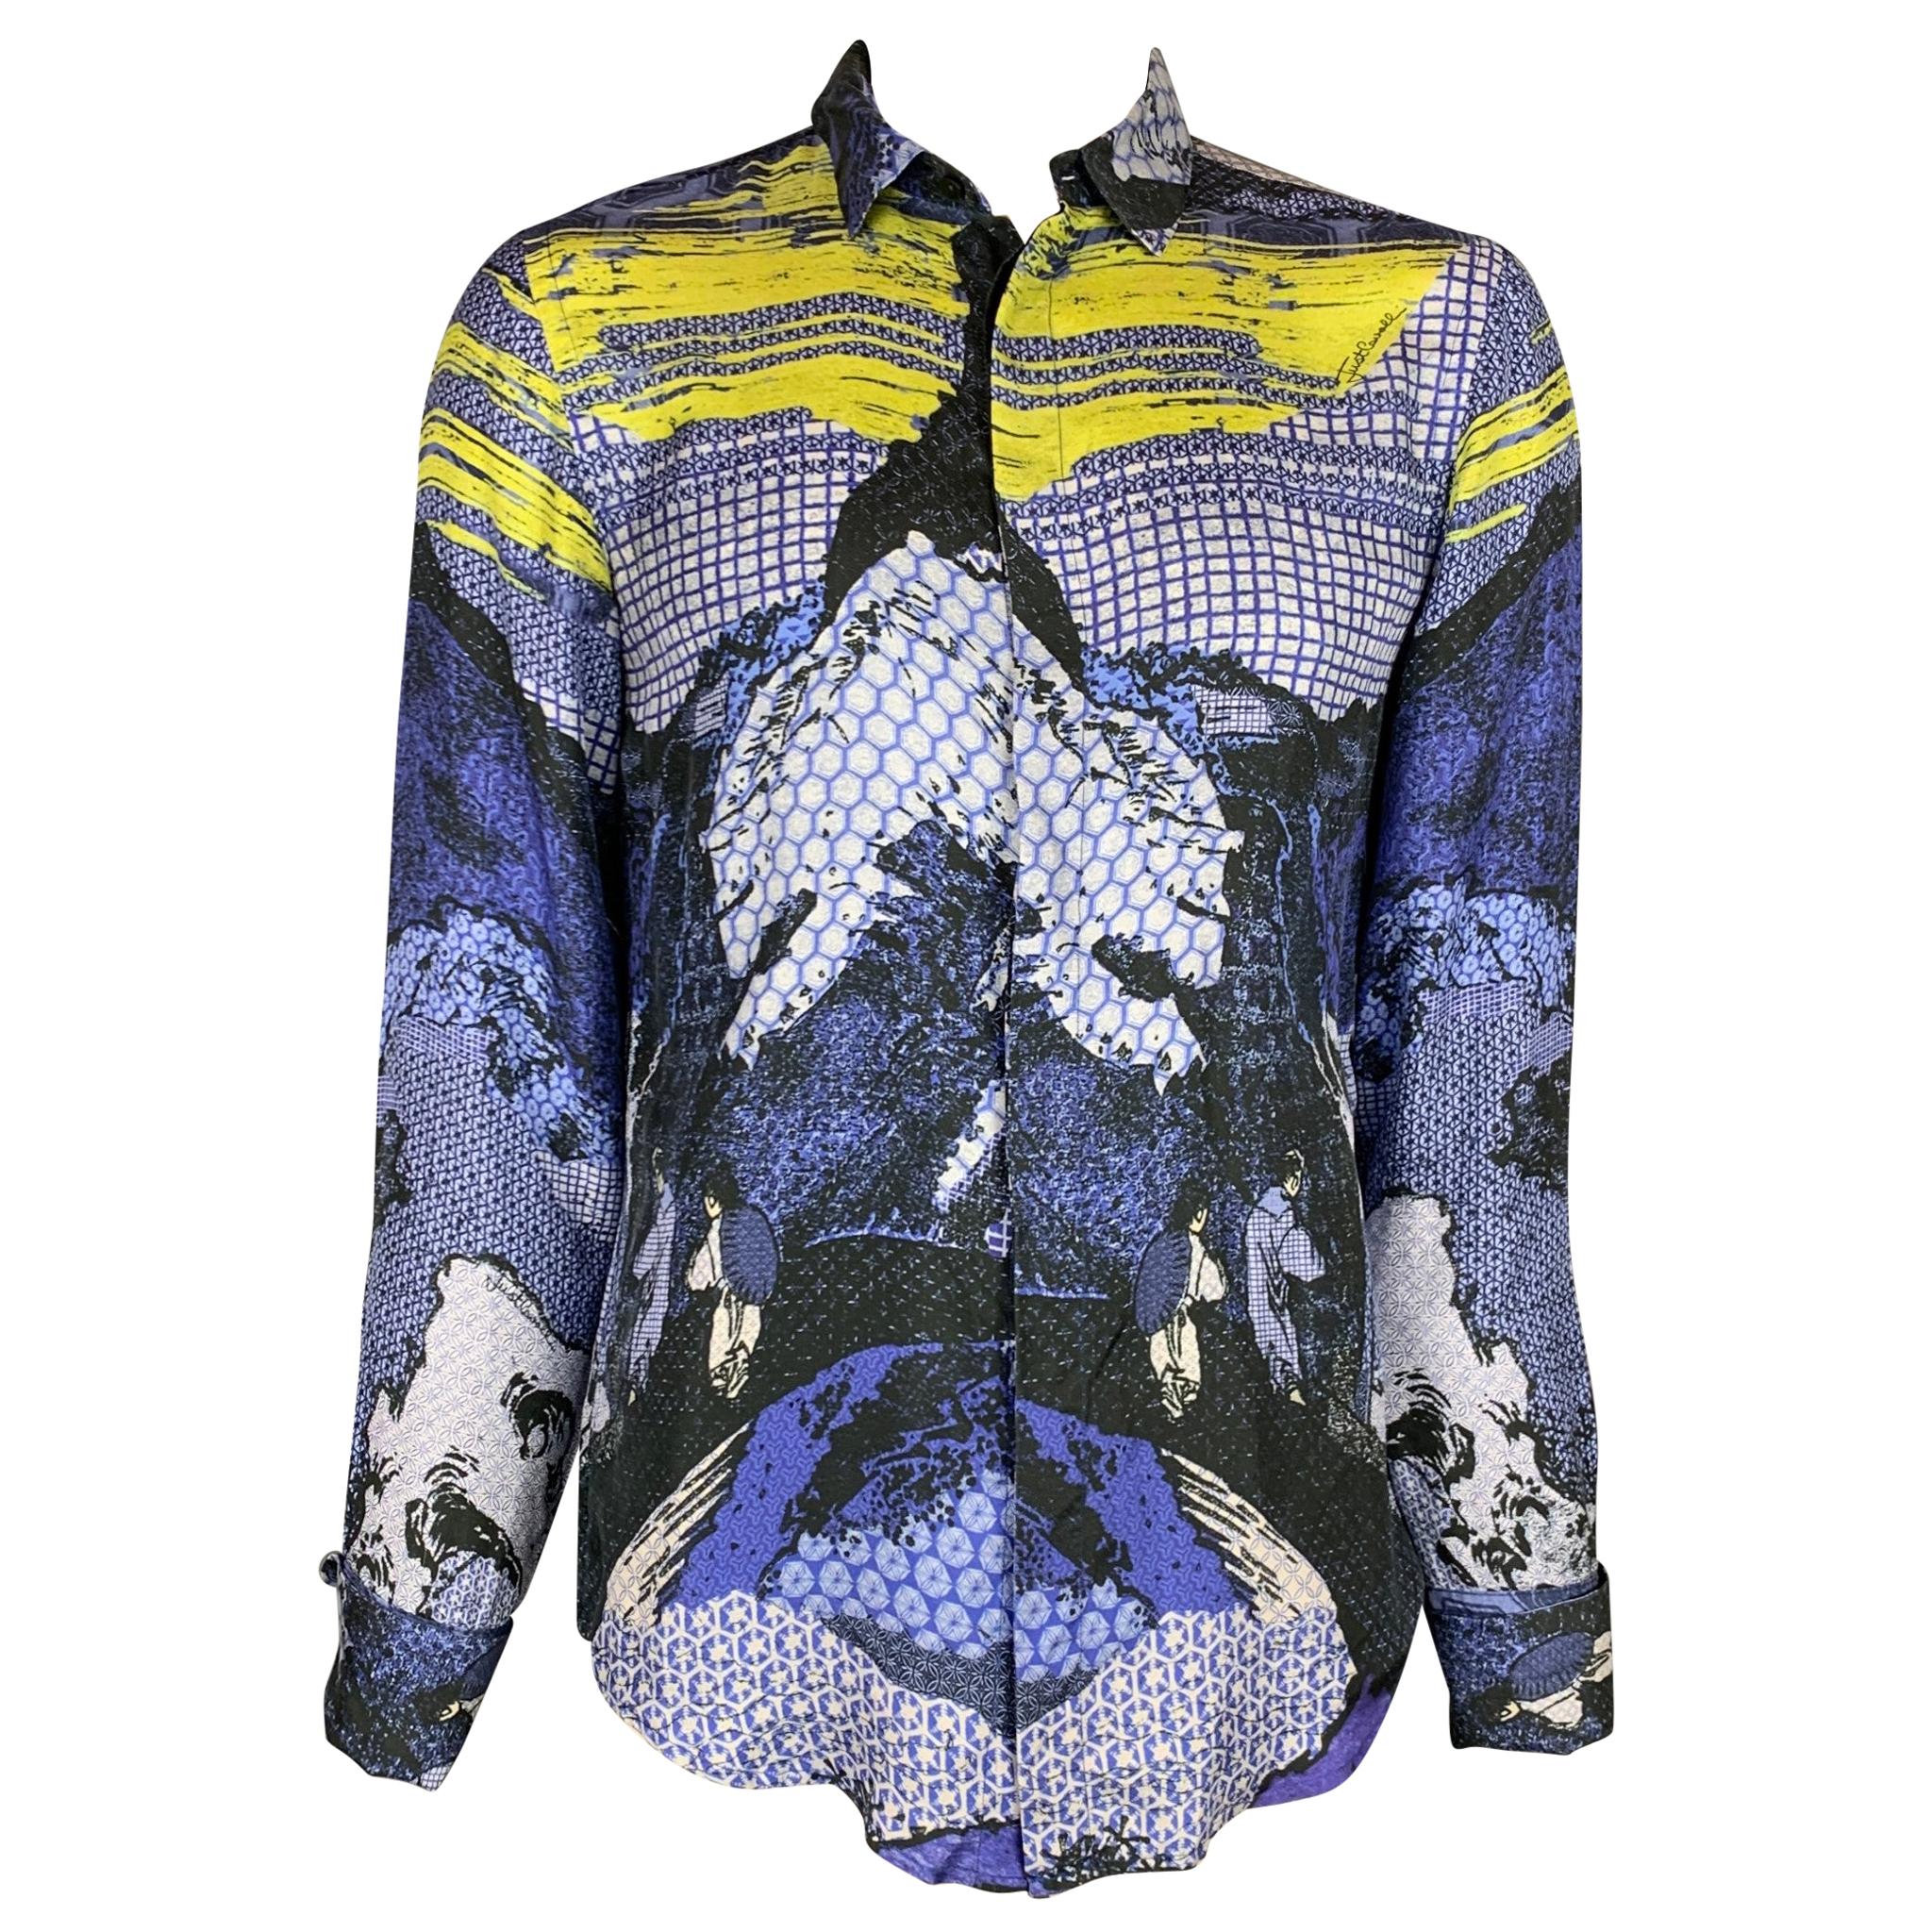 JUST CAVALLI Size L Blue & Yellow Print Silk French Cuff Long Sleeve Shirt